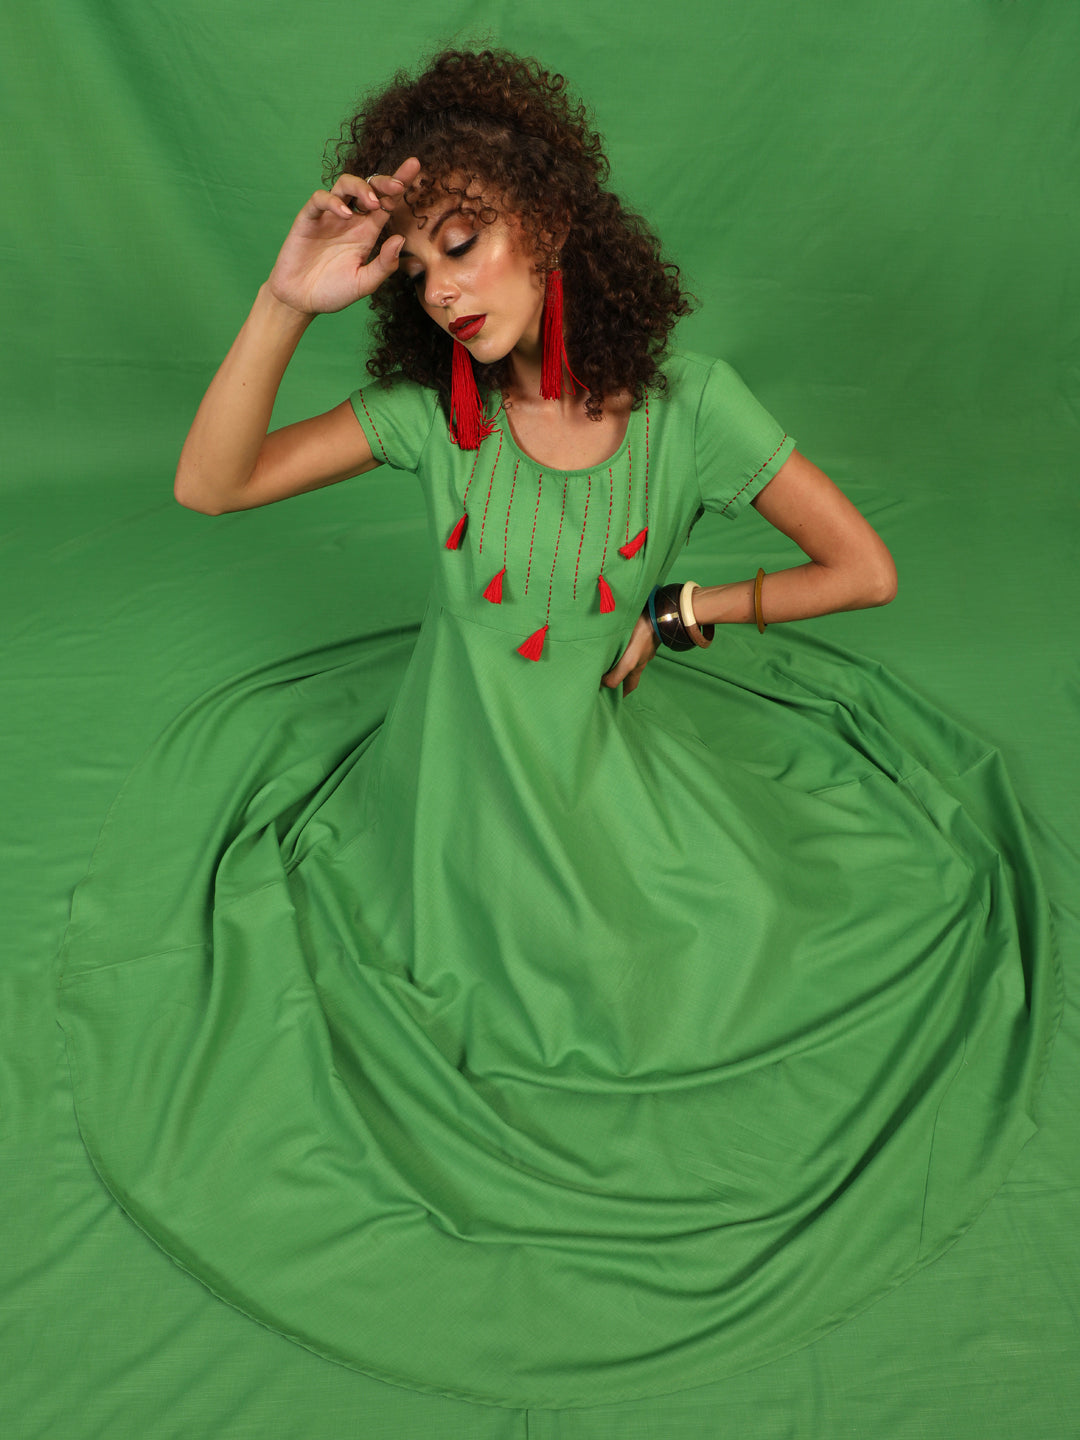 Women's Green Maxi Dress With Thread Worked Yoke - Aks